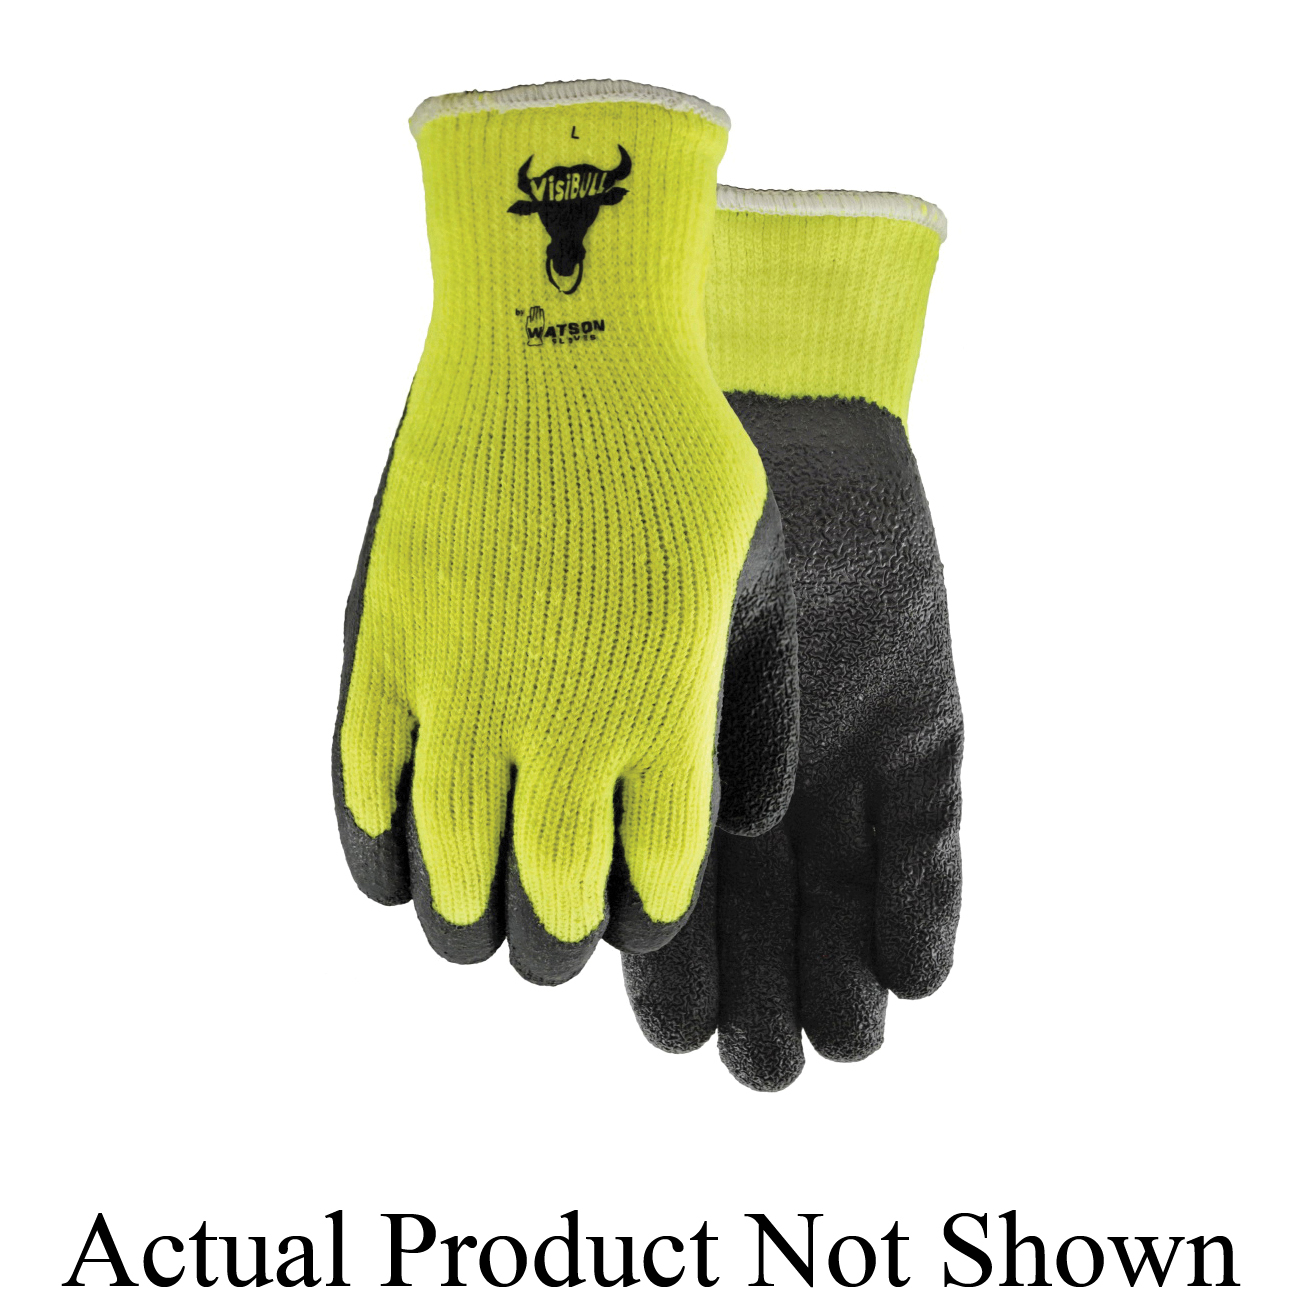 Cut Resistant - Watson Gloves